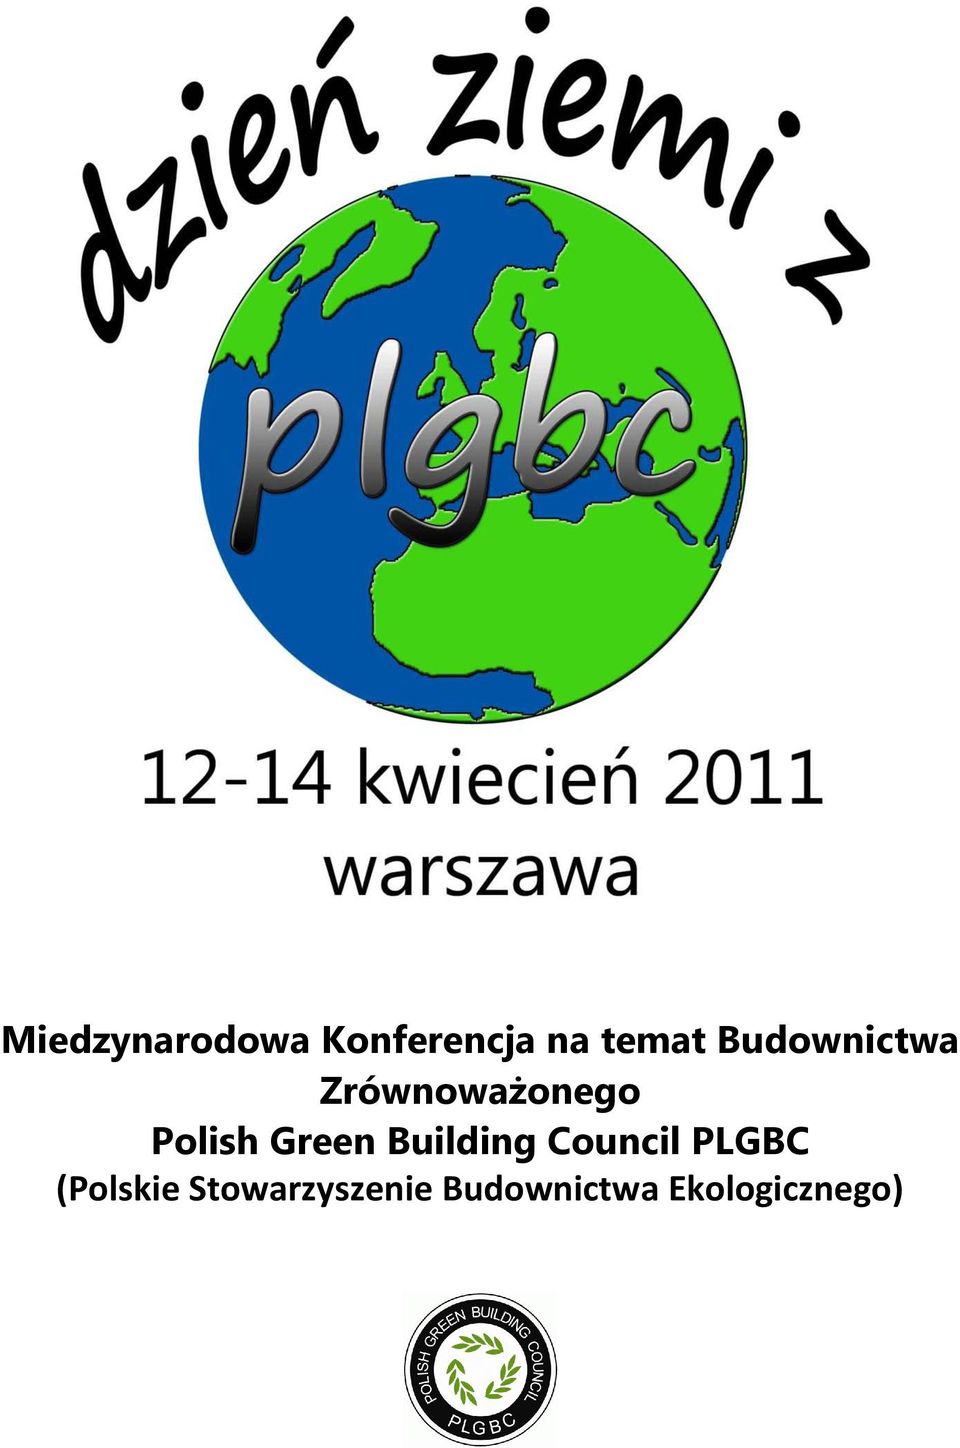 Green Building Council PLGBC (Polskie